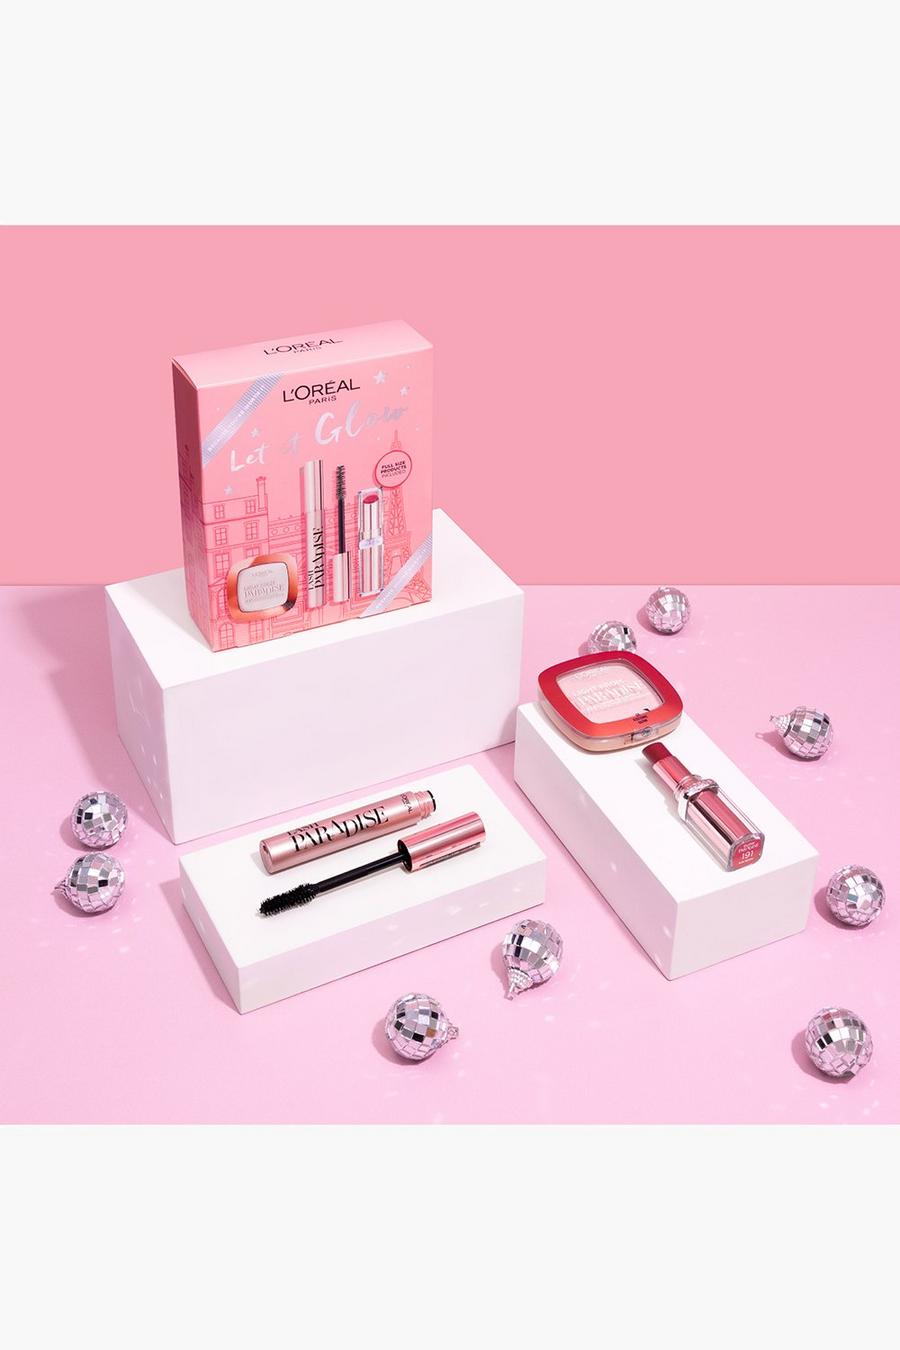 Pink rose L'Oréal Paris Let It Glow Lipstick, Mascara and Highlighting Powder Trio Gift Set